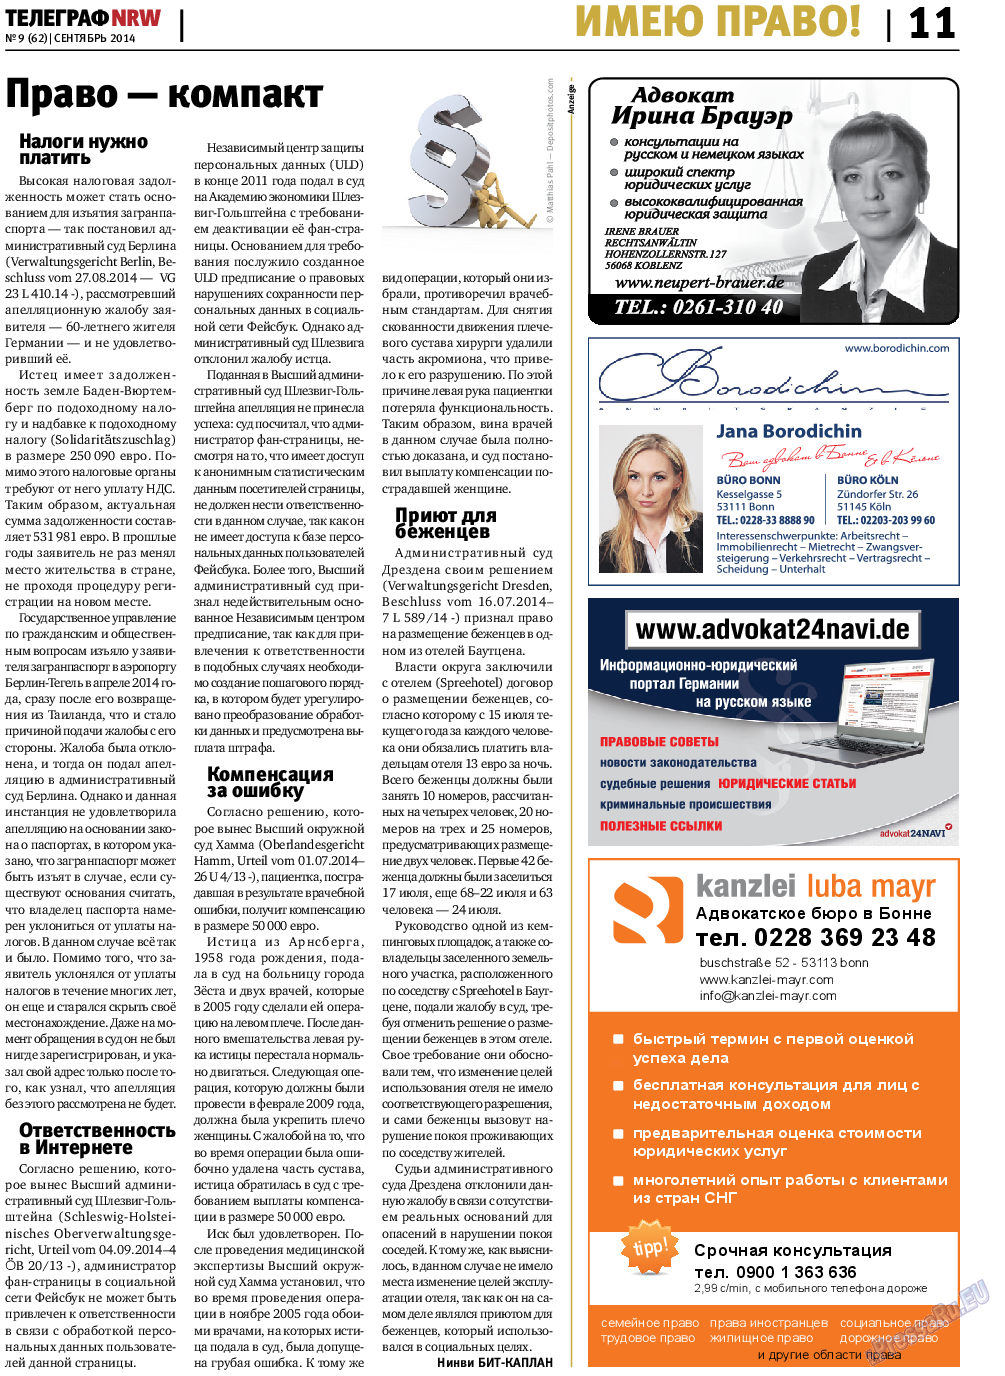 Телеграф NRW, газета. 2014 №9 стр.11